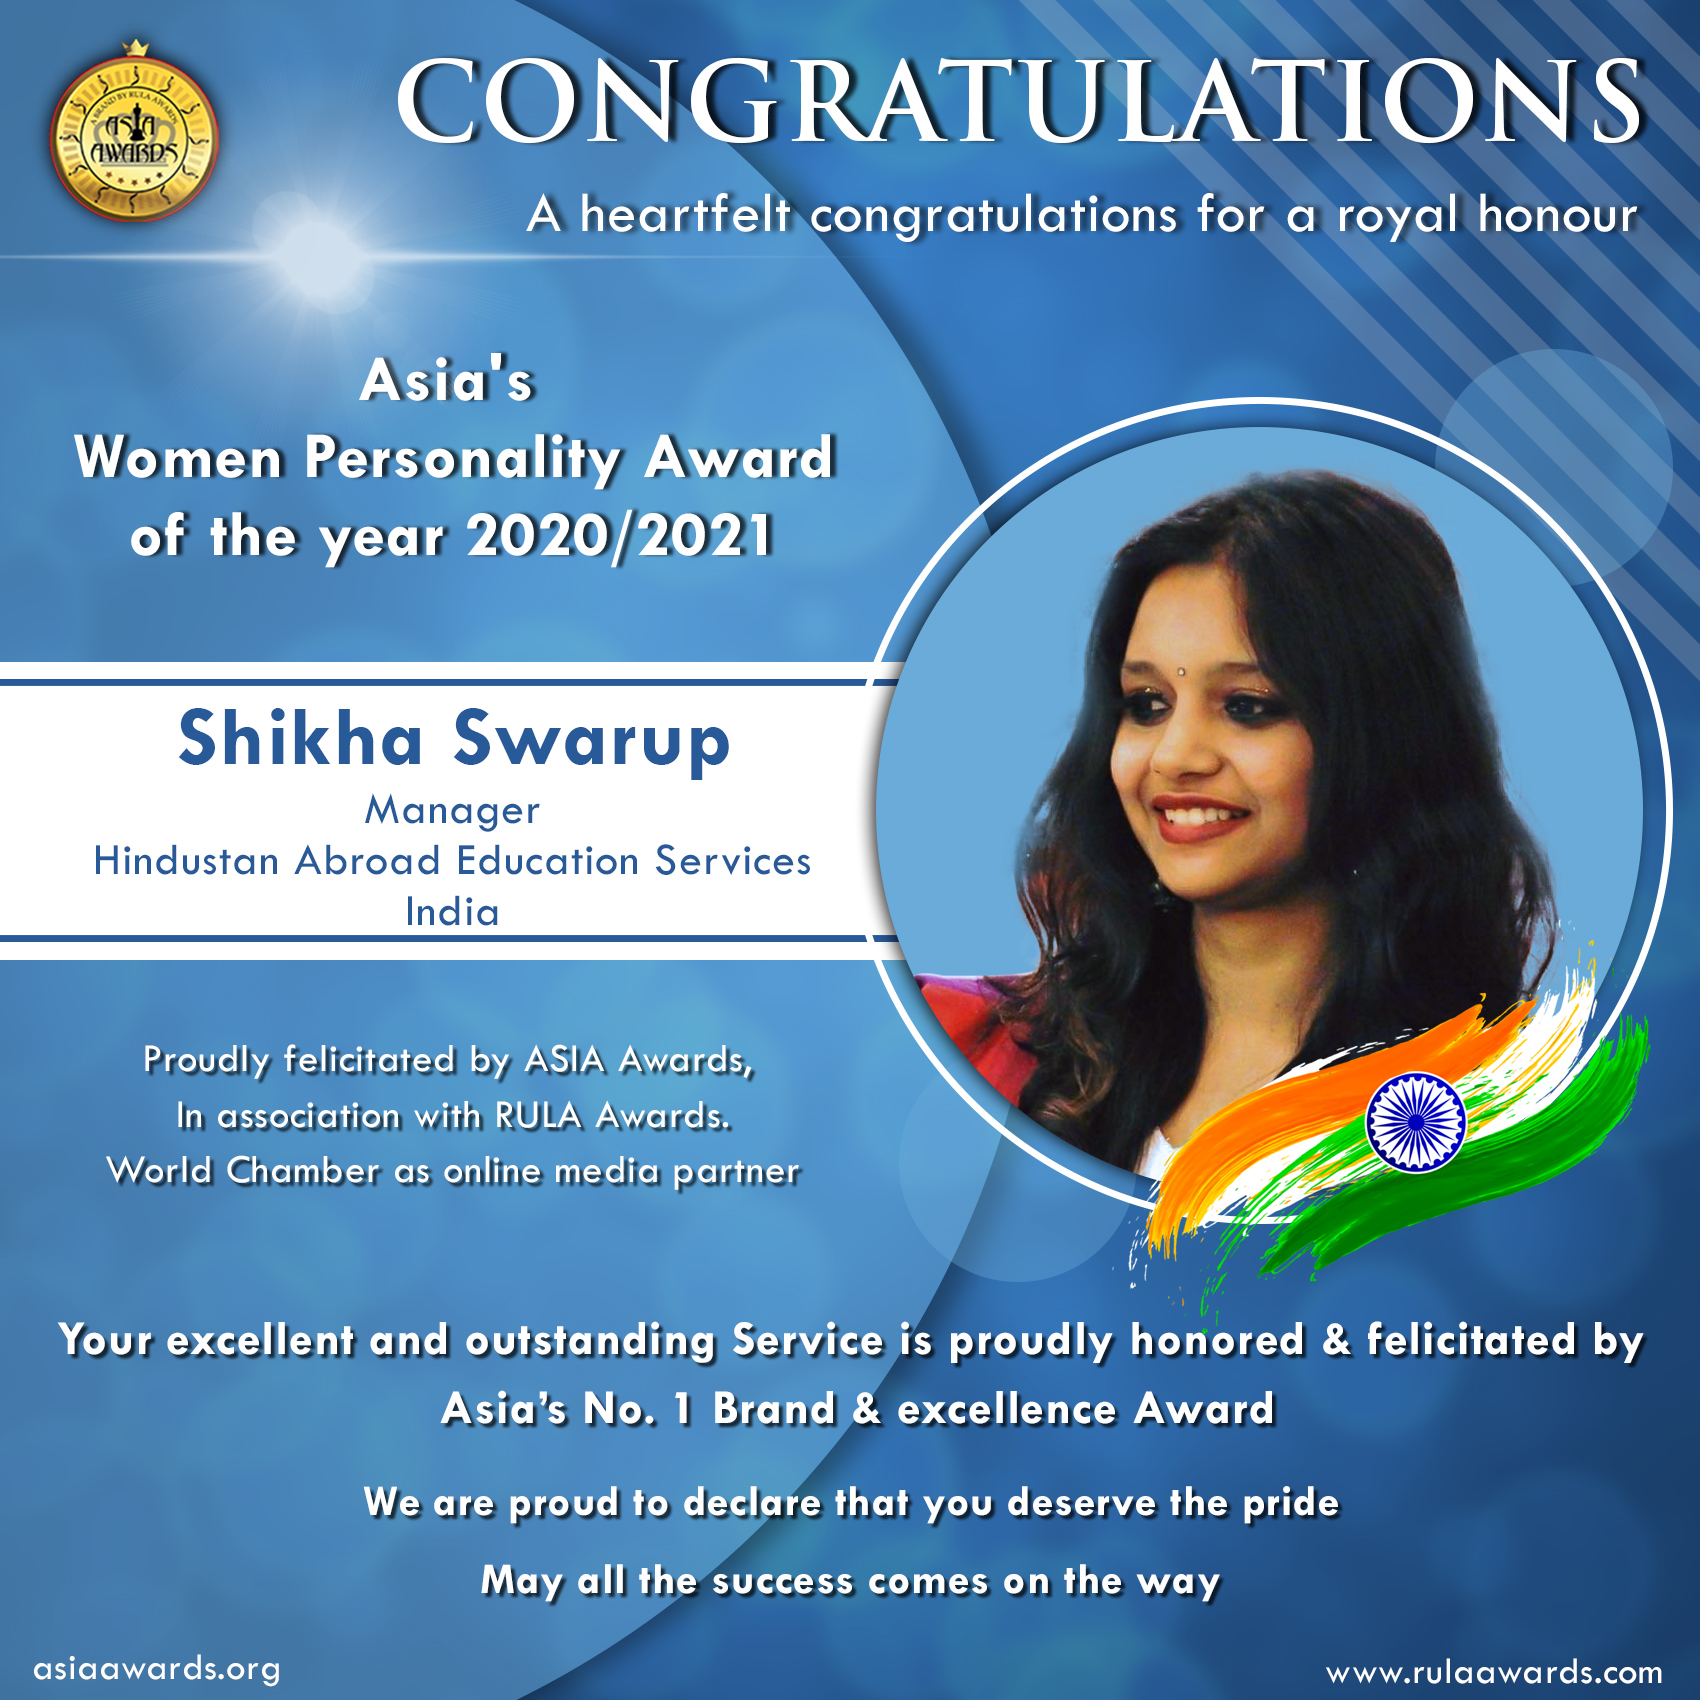 Shikha Swarup has bagged Asia's Women Personality Award